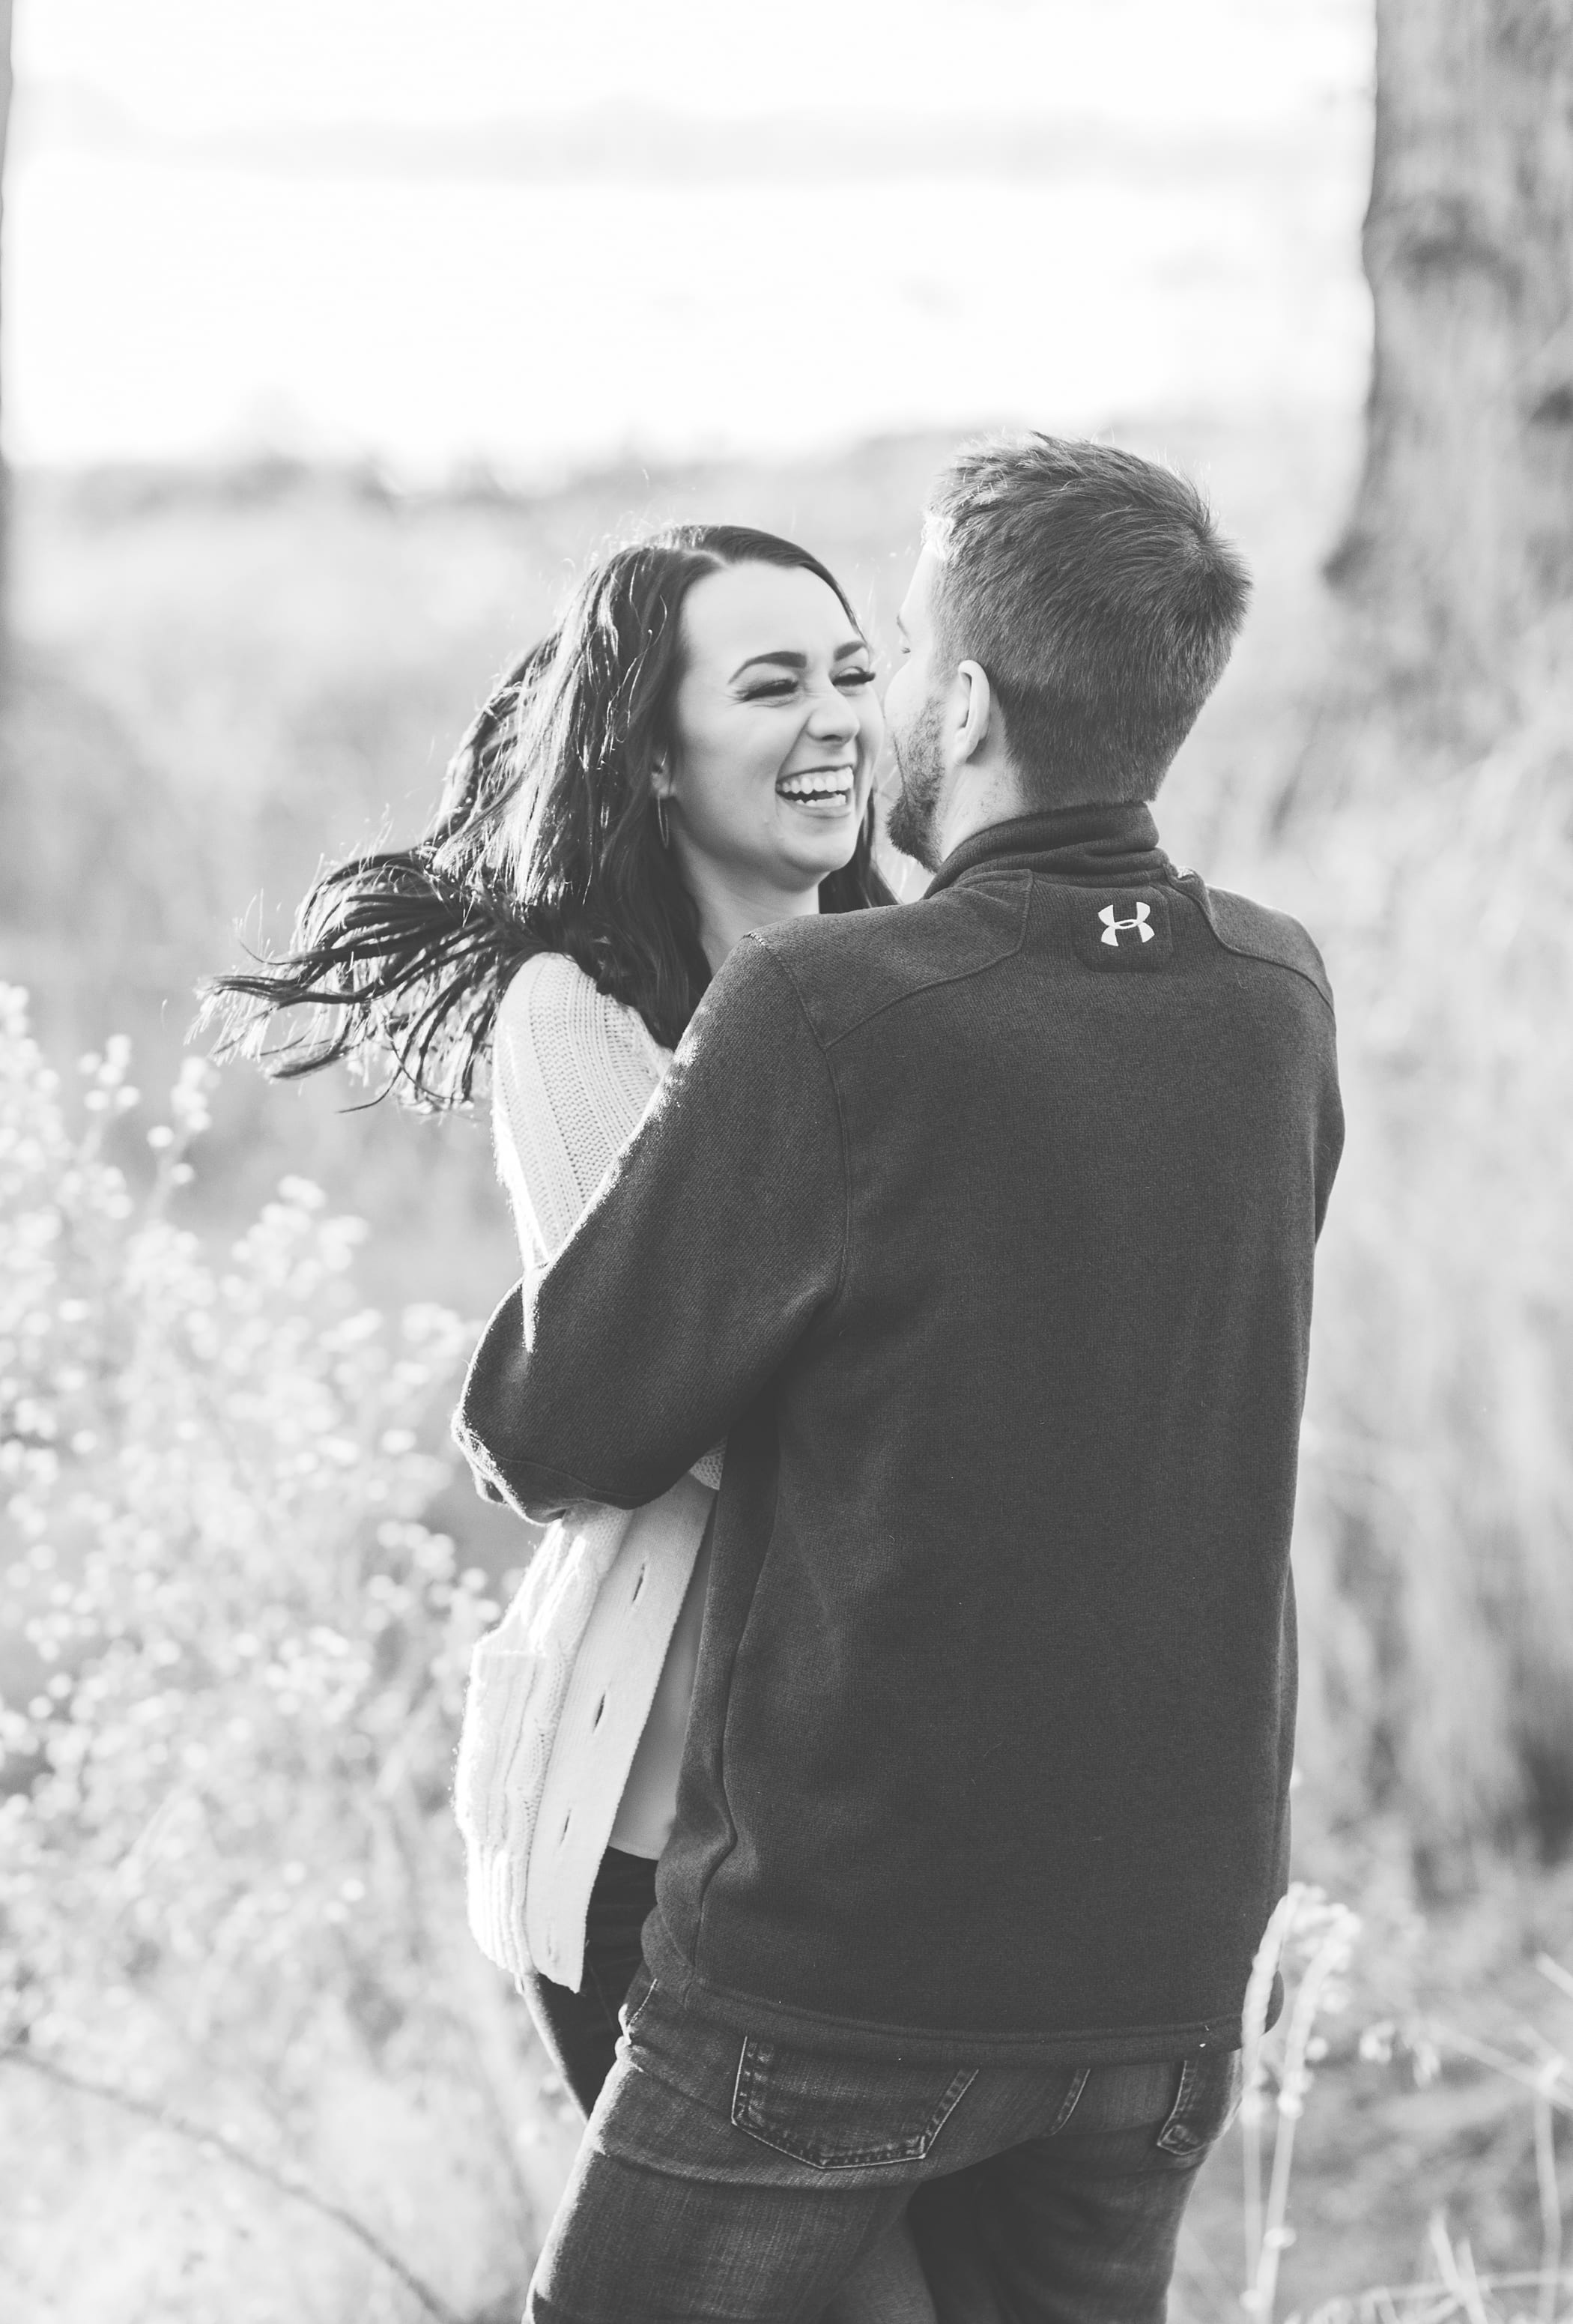 Idaho Falls, Idaho Engagements by Michelle & Logan